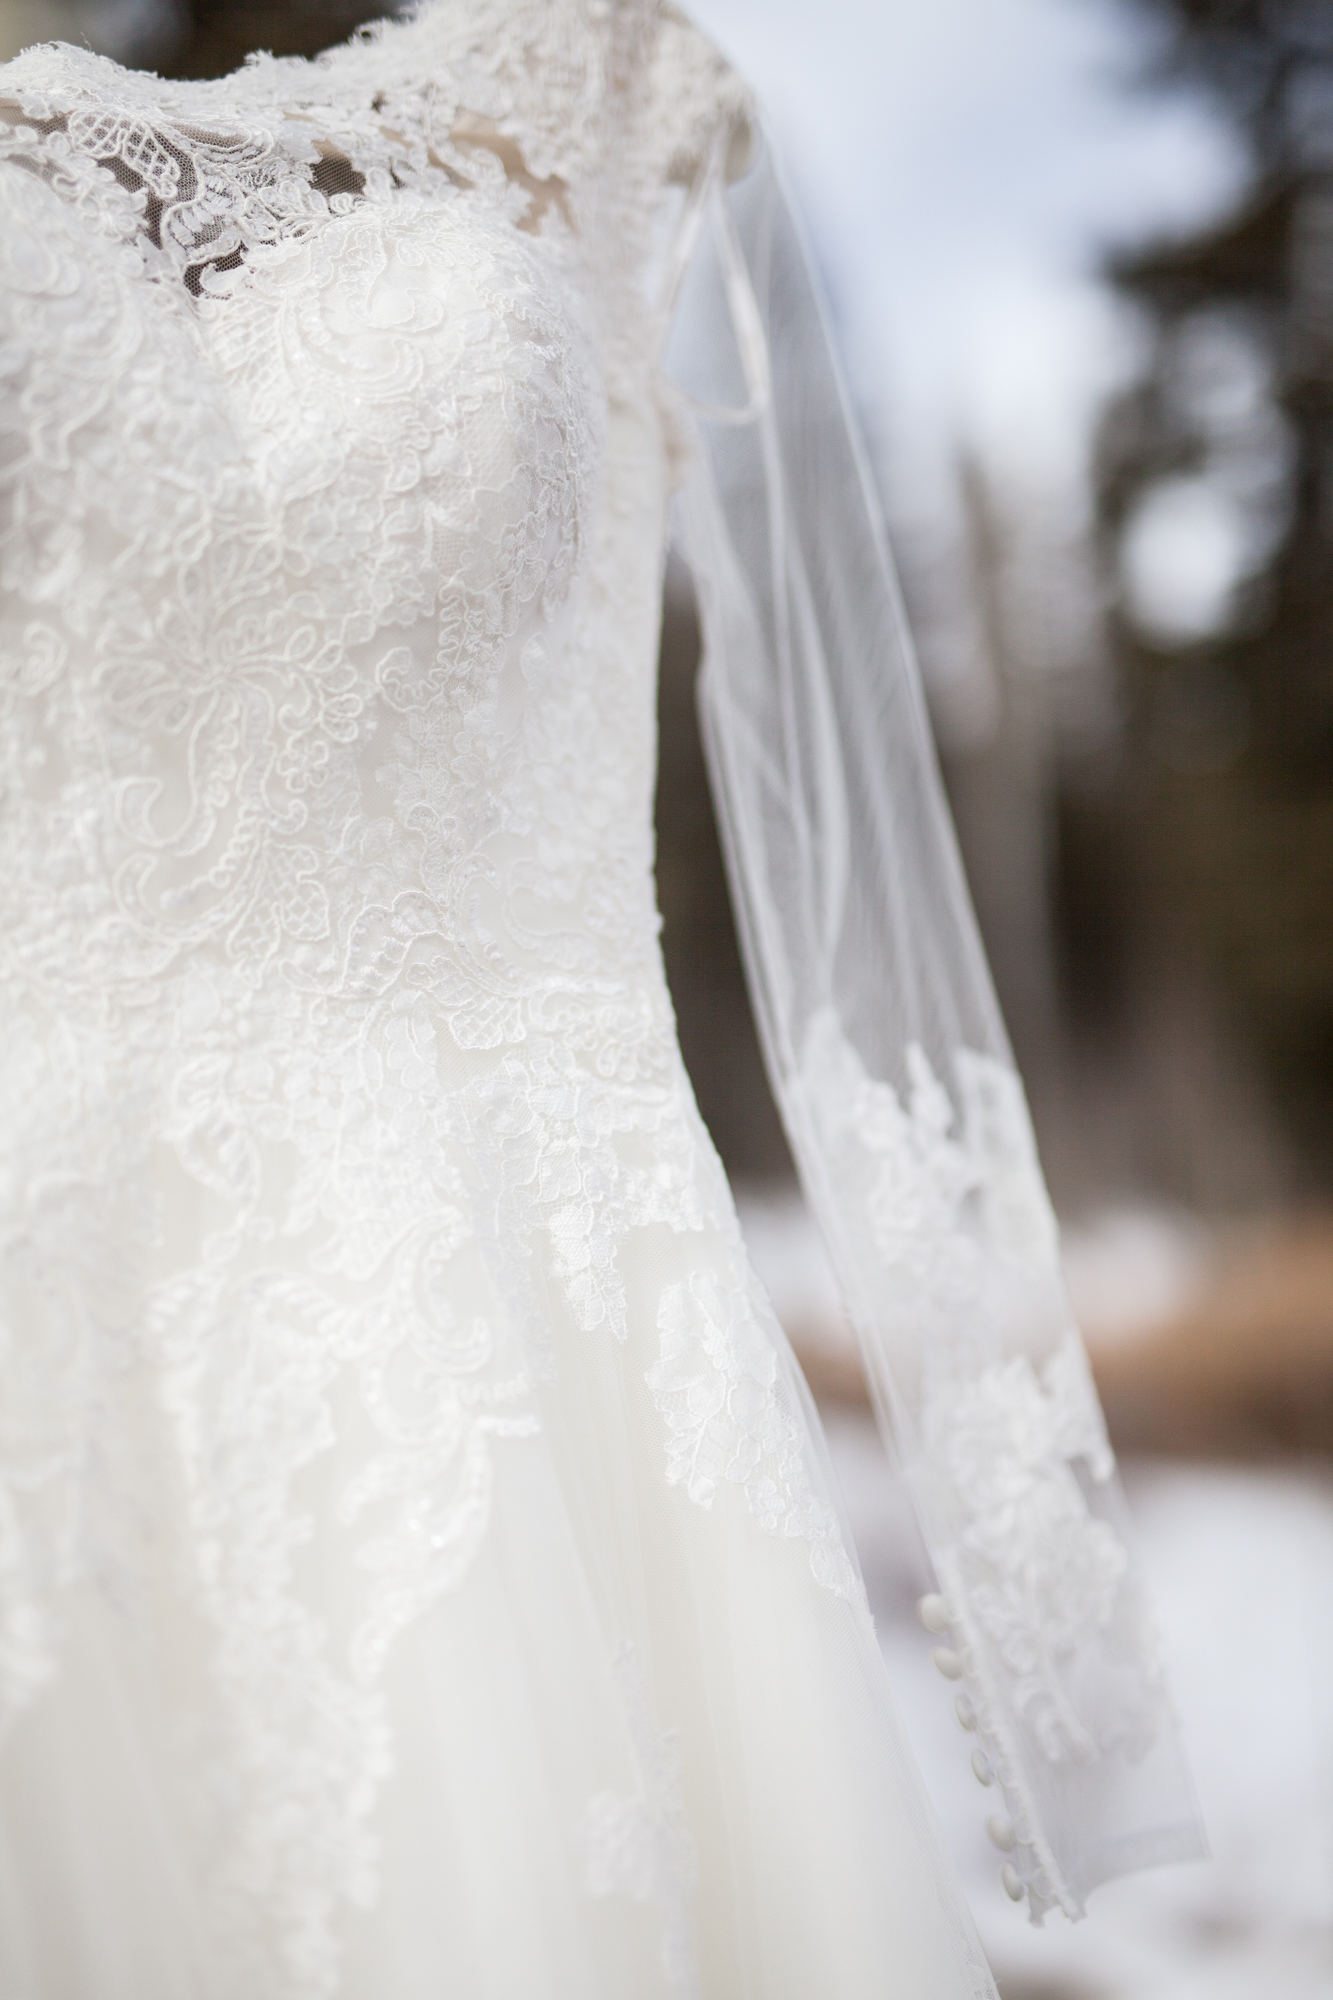 Durango, Colorado Winter Wedding, lace wedding dress ideas